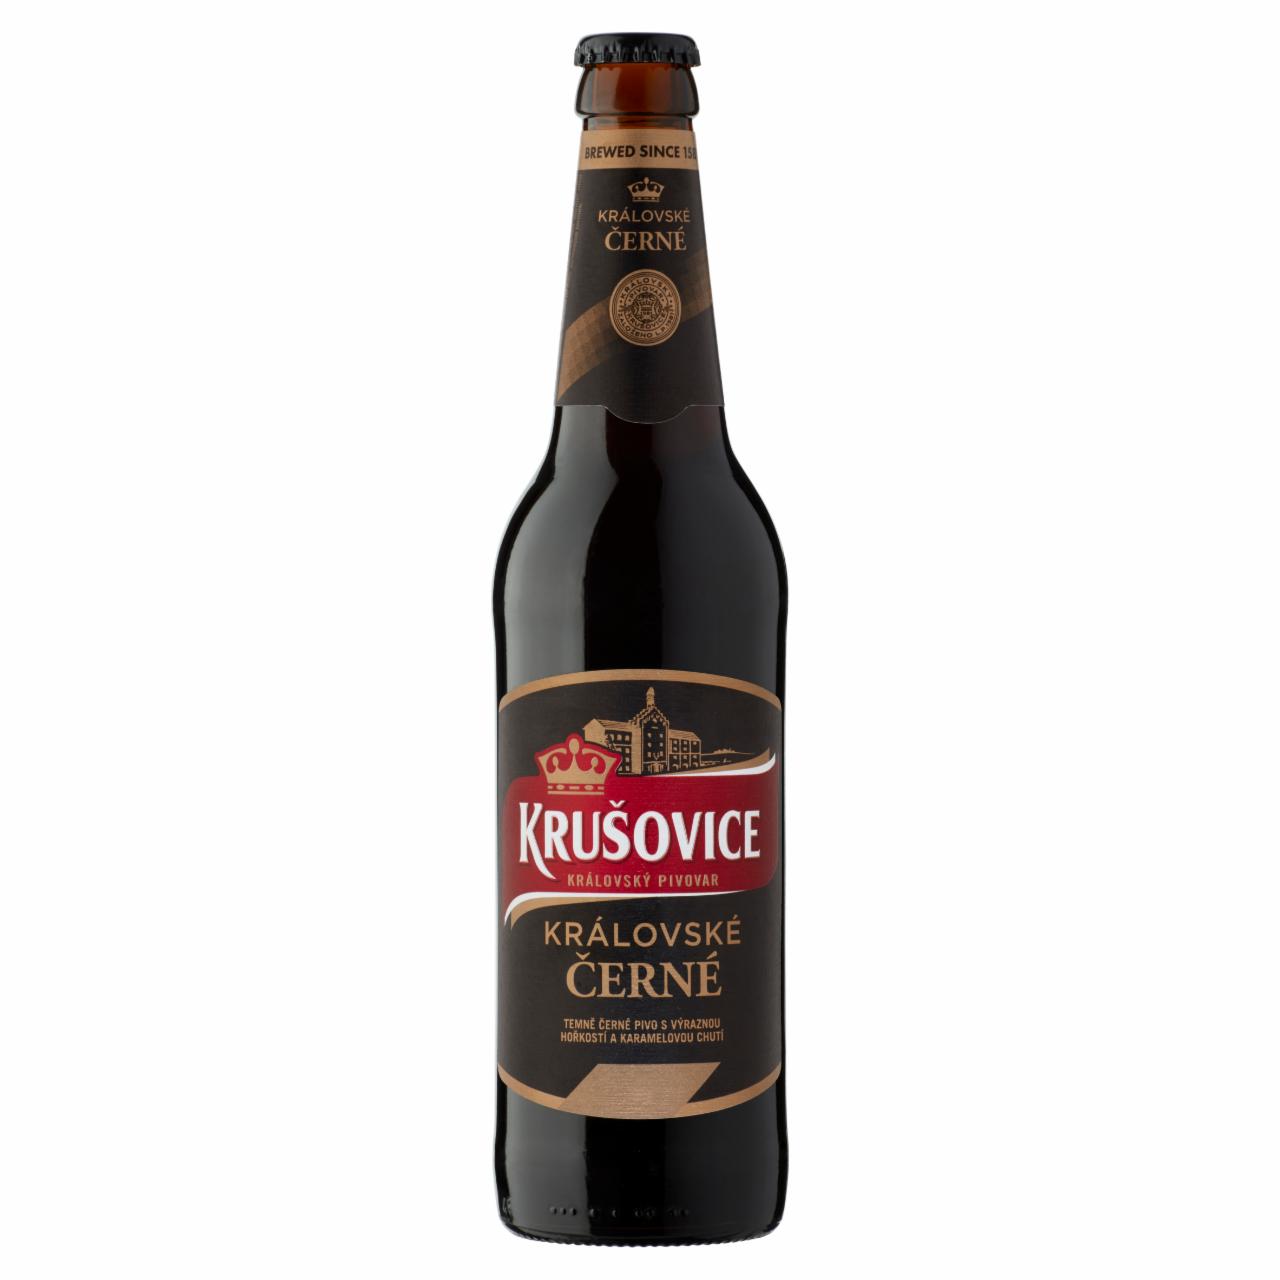 Képek - Krušovice Černé eredeti cseh import barna sör 3,8% 0,5 l üveg